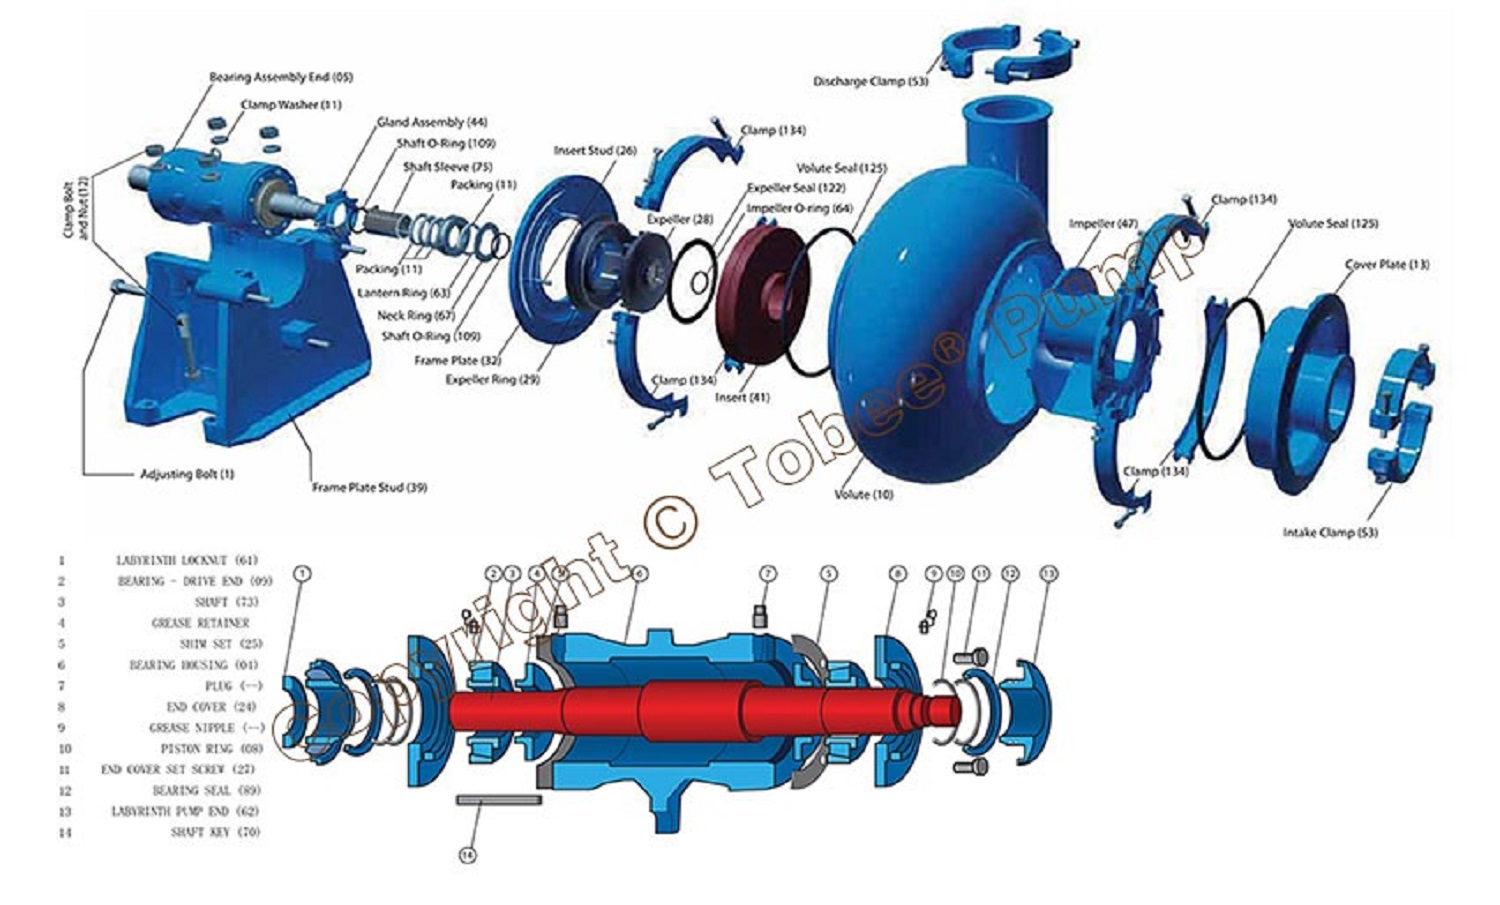 TG18x16TU Sand Dredging Pumpa brasion gravel centrifugal pumphigh pressure dredge pump